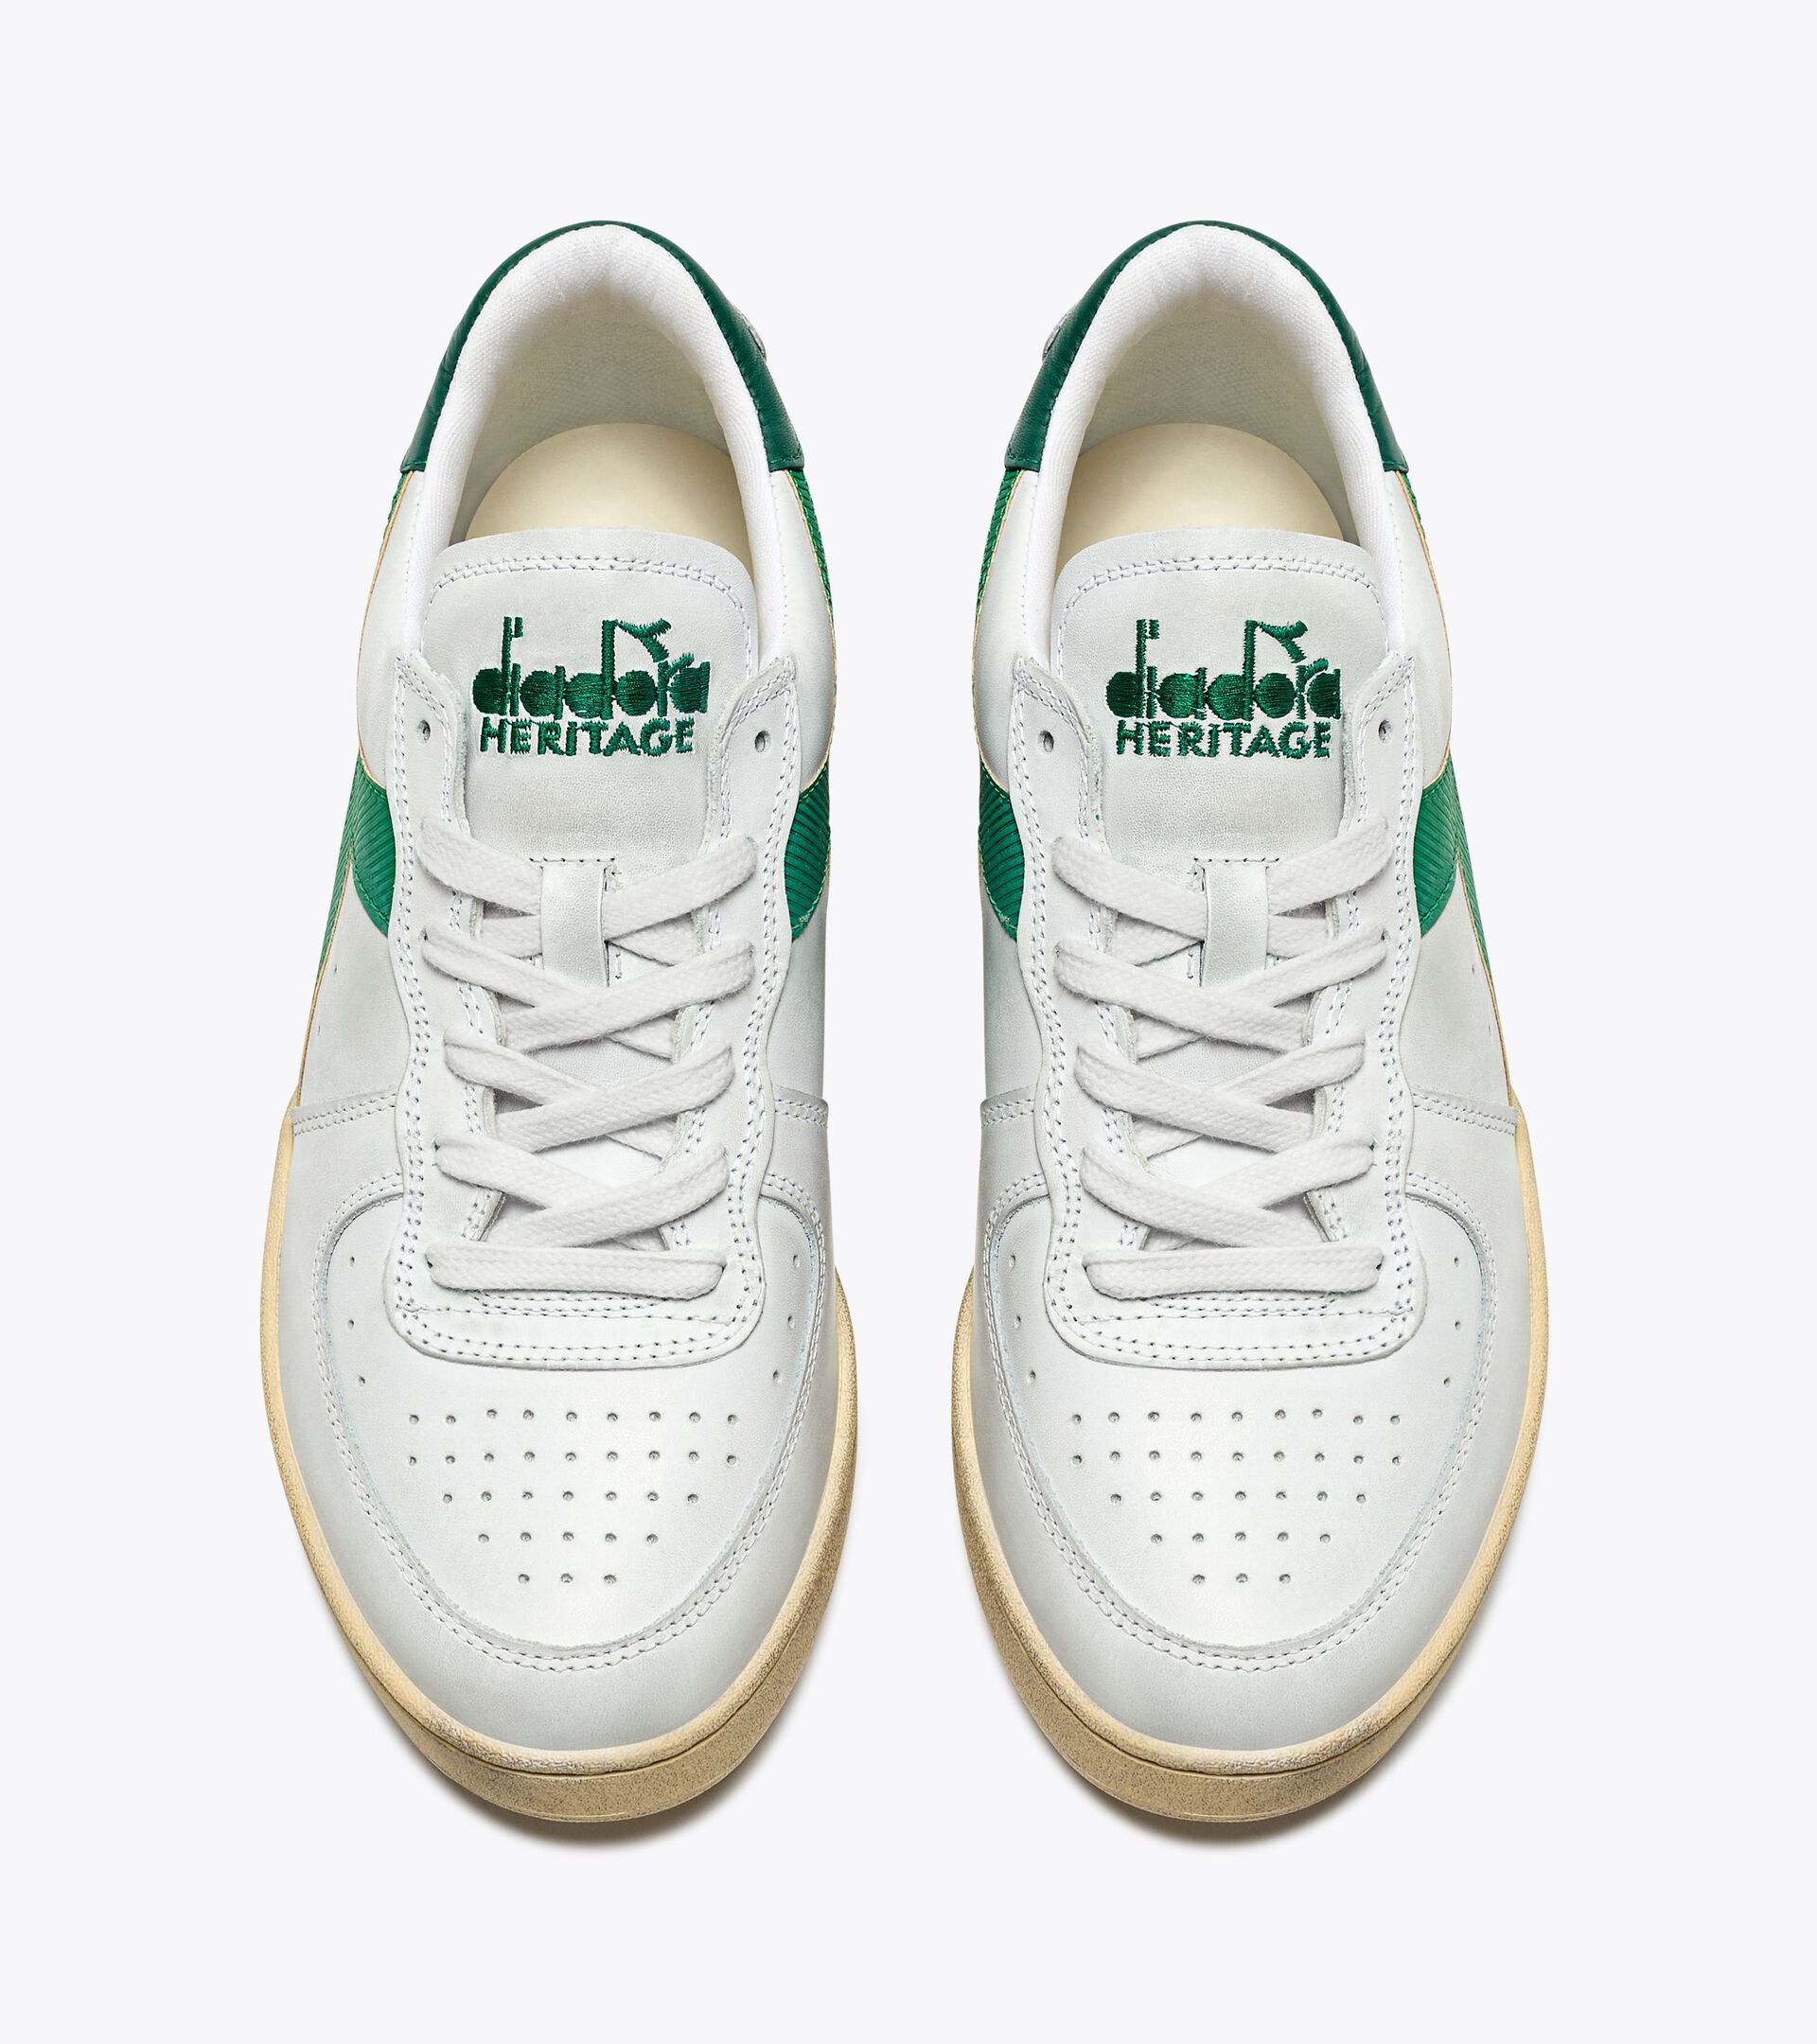 Heritage shoe - Gender Neutral MI BASKET LOW USED WHITE/VERDANT GREEN - Diadora